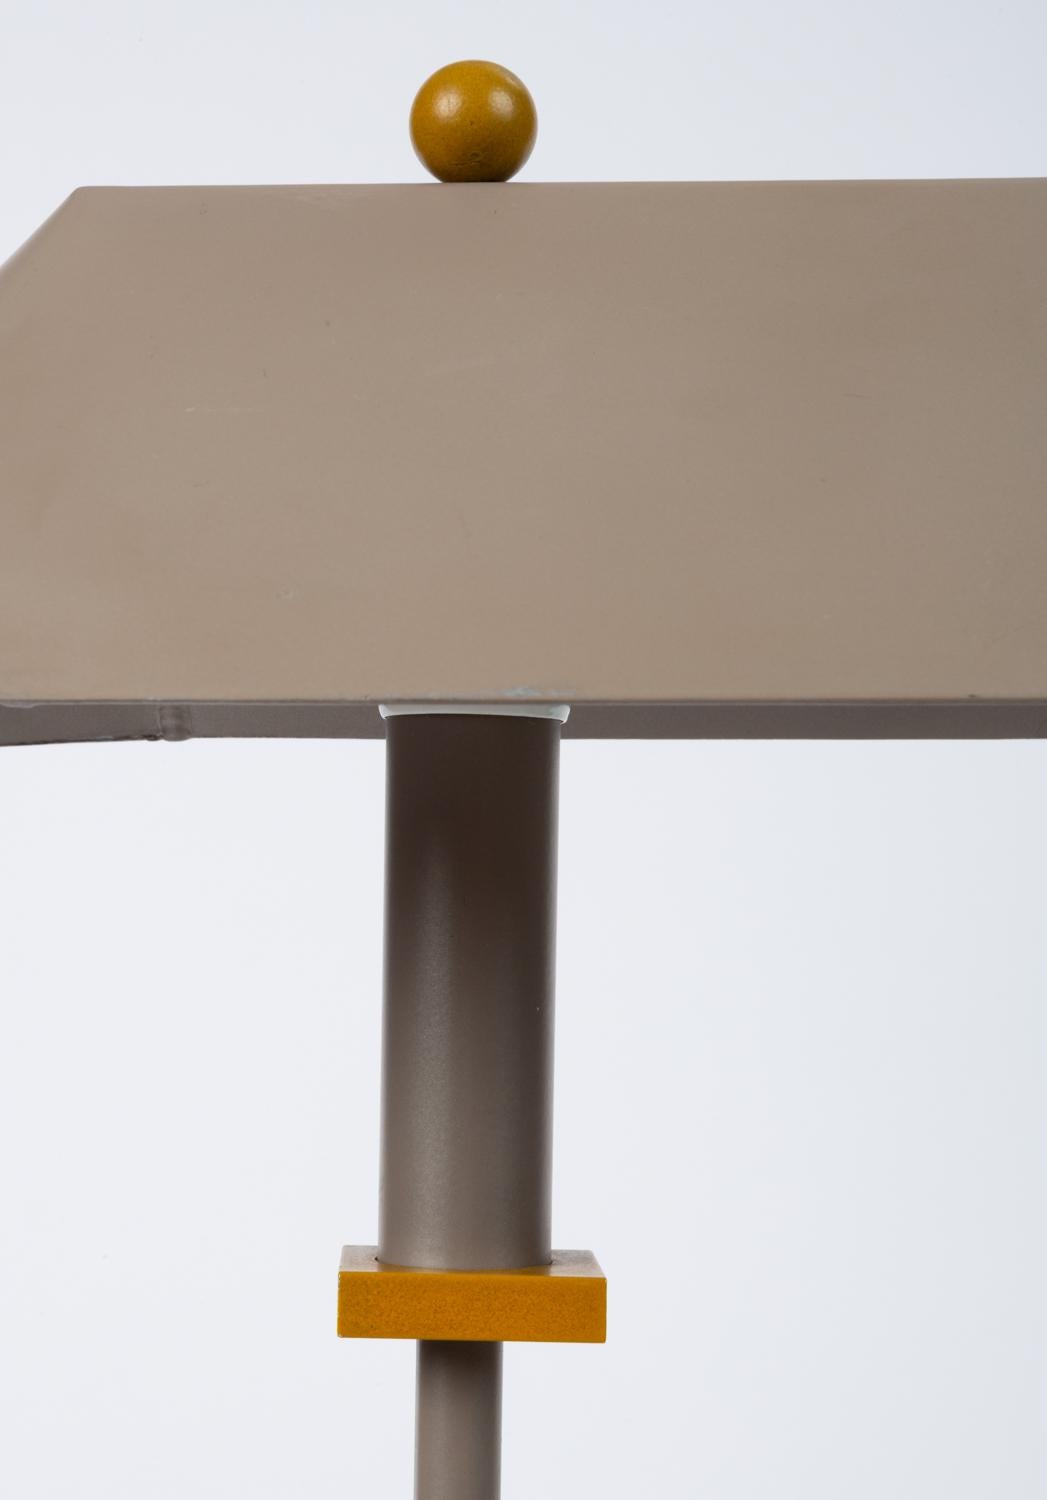 1990s Postmodern Desk or Table Lamp by Robert Sonneman for George Kovacs 1